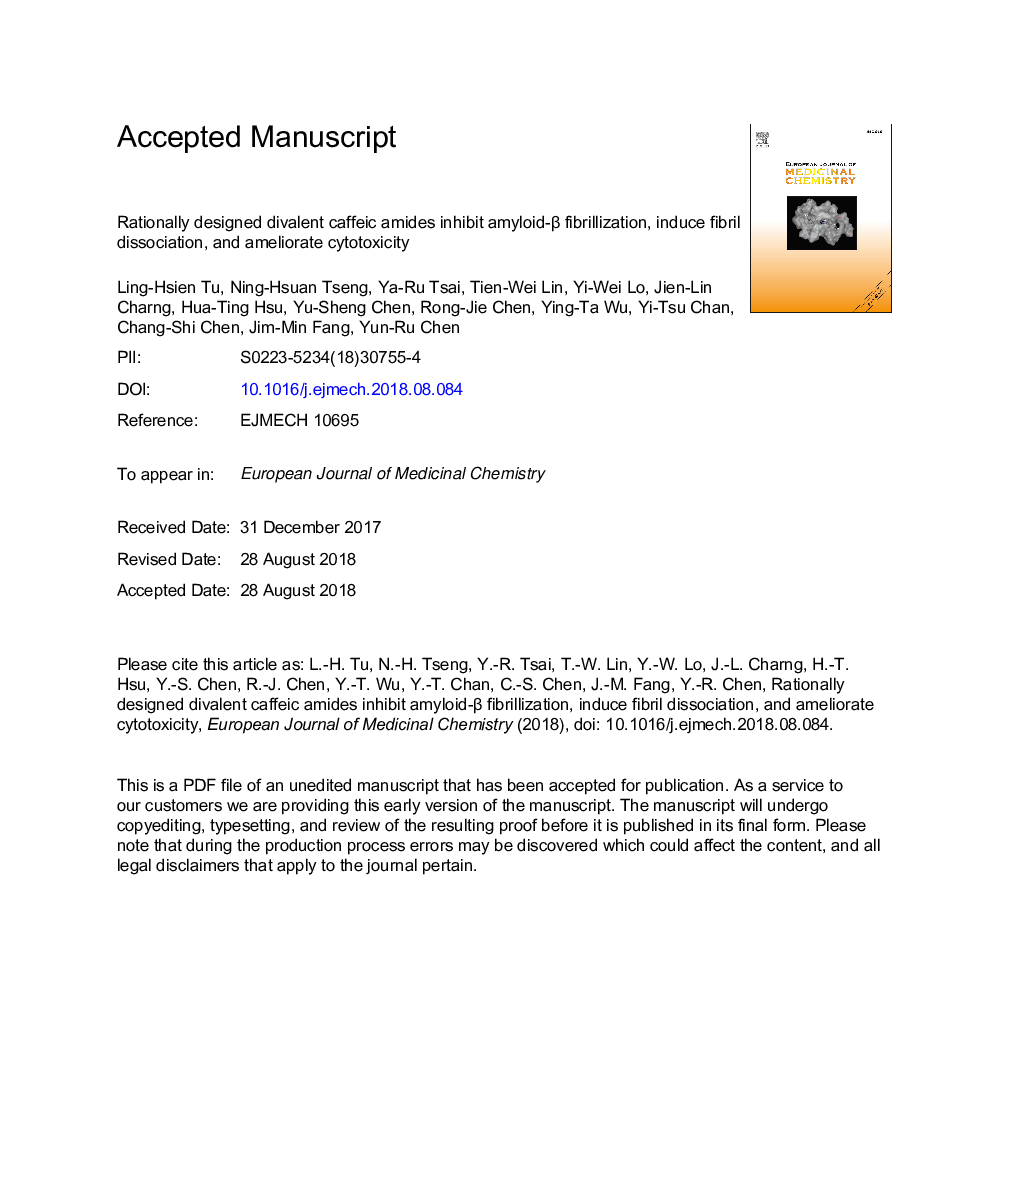 Rationally designed divalent caffeic amides inhibit amyloid-Î² fibrillization, induce fibril dissociation, and ameliorate cytotoxicity